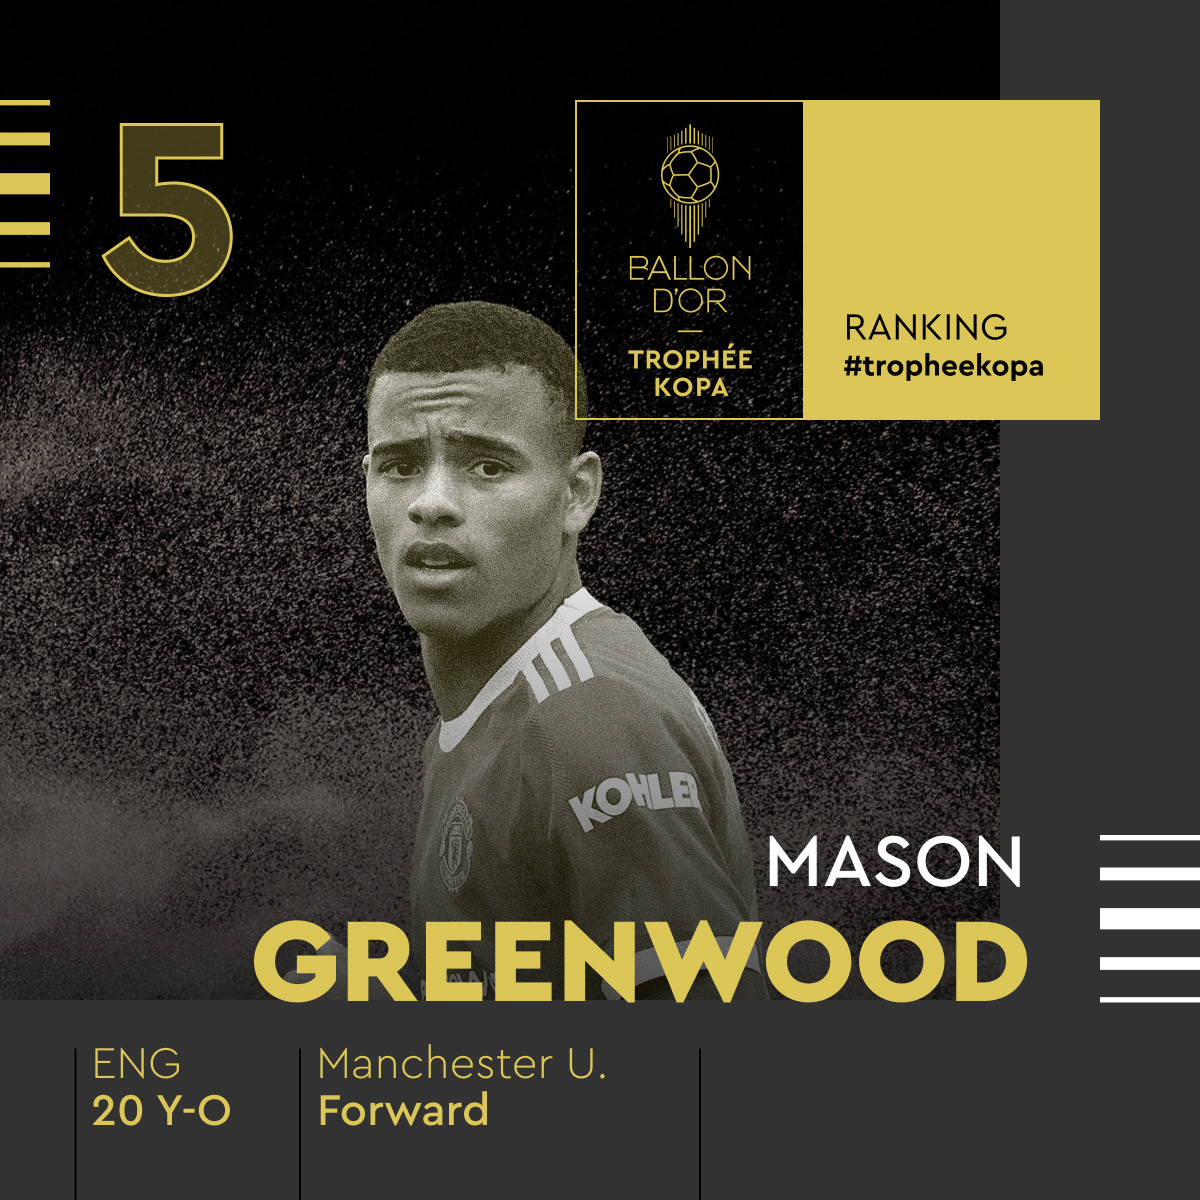 Mason Greenwood has been ranked 5th in the 2021 #TropheeKopa #MUFC